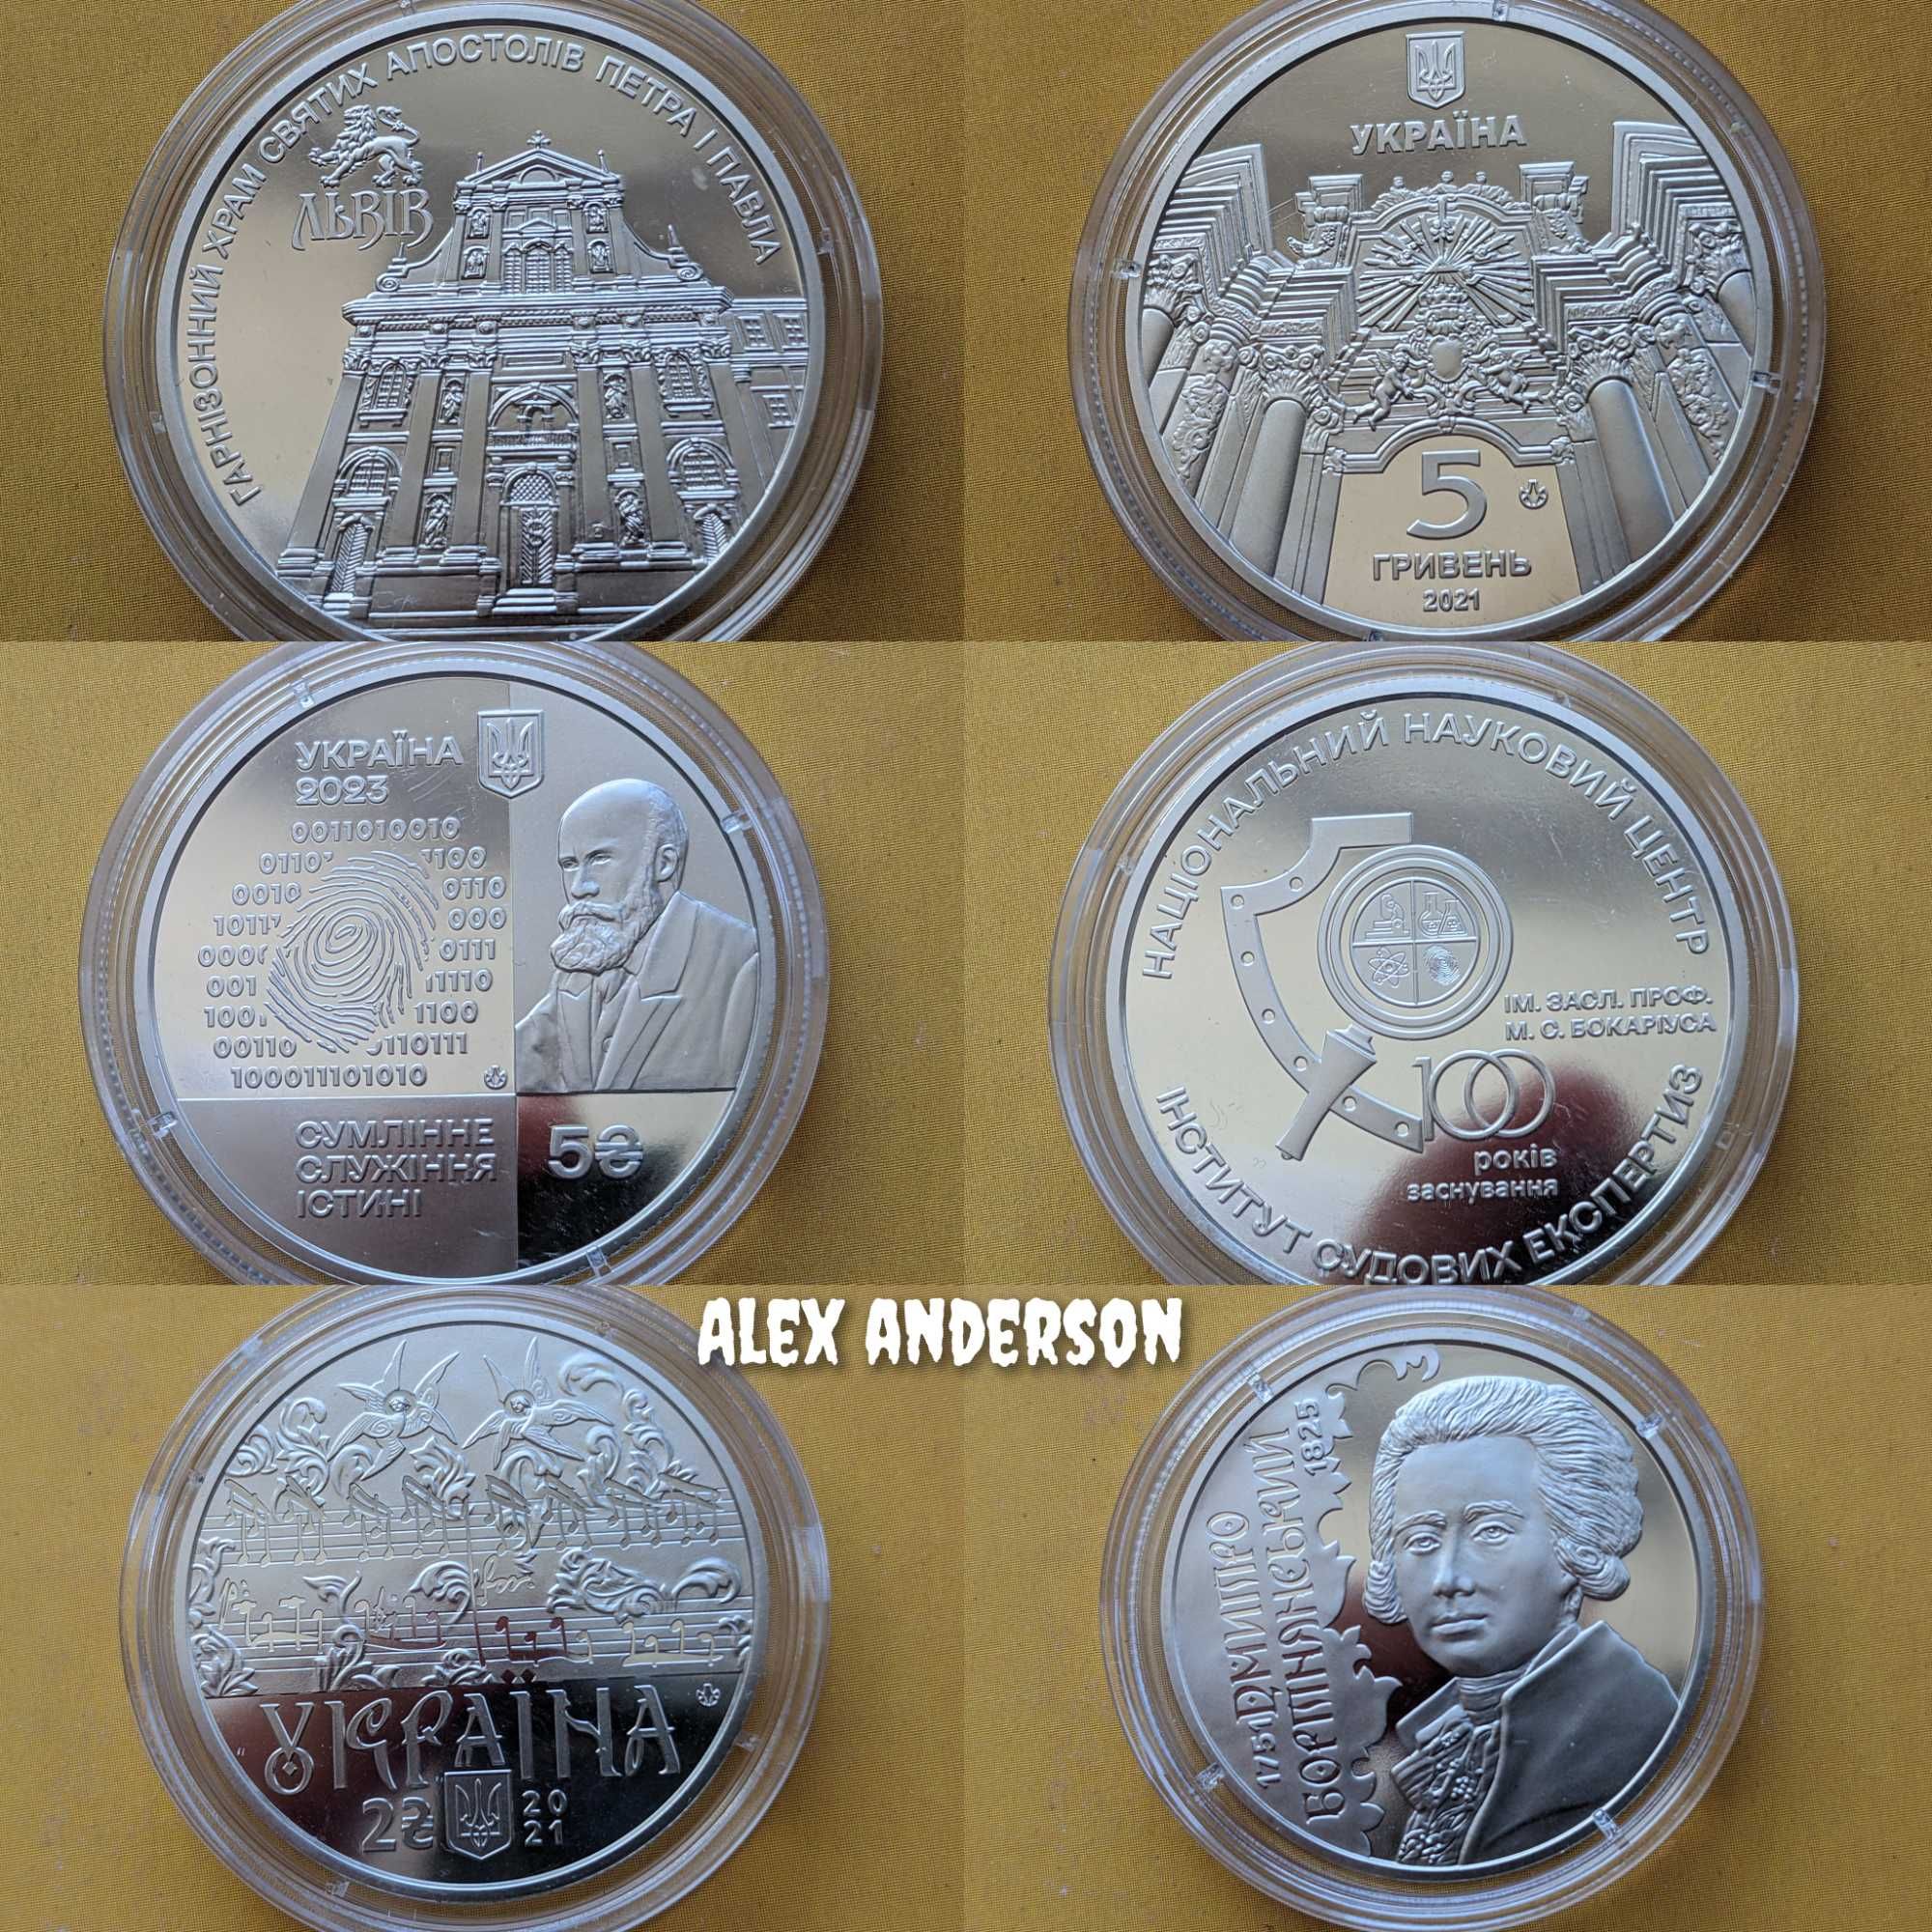 Пам'ятні монети України (чит. опис)